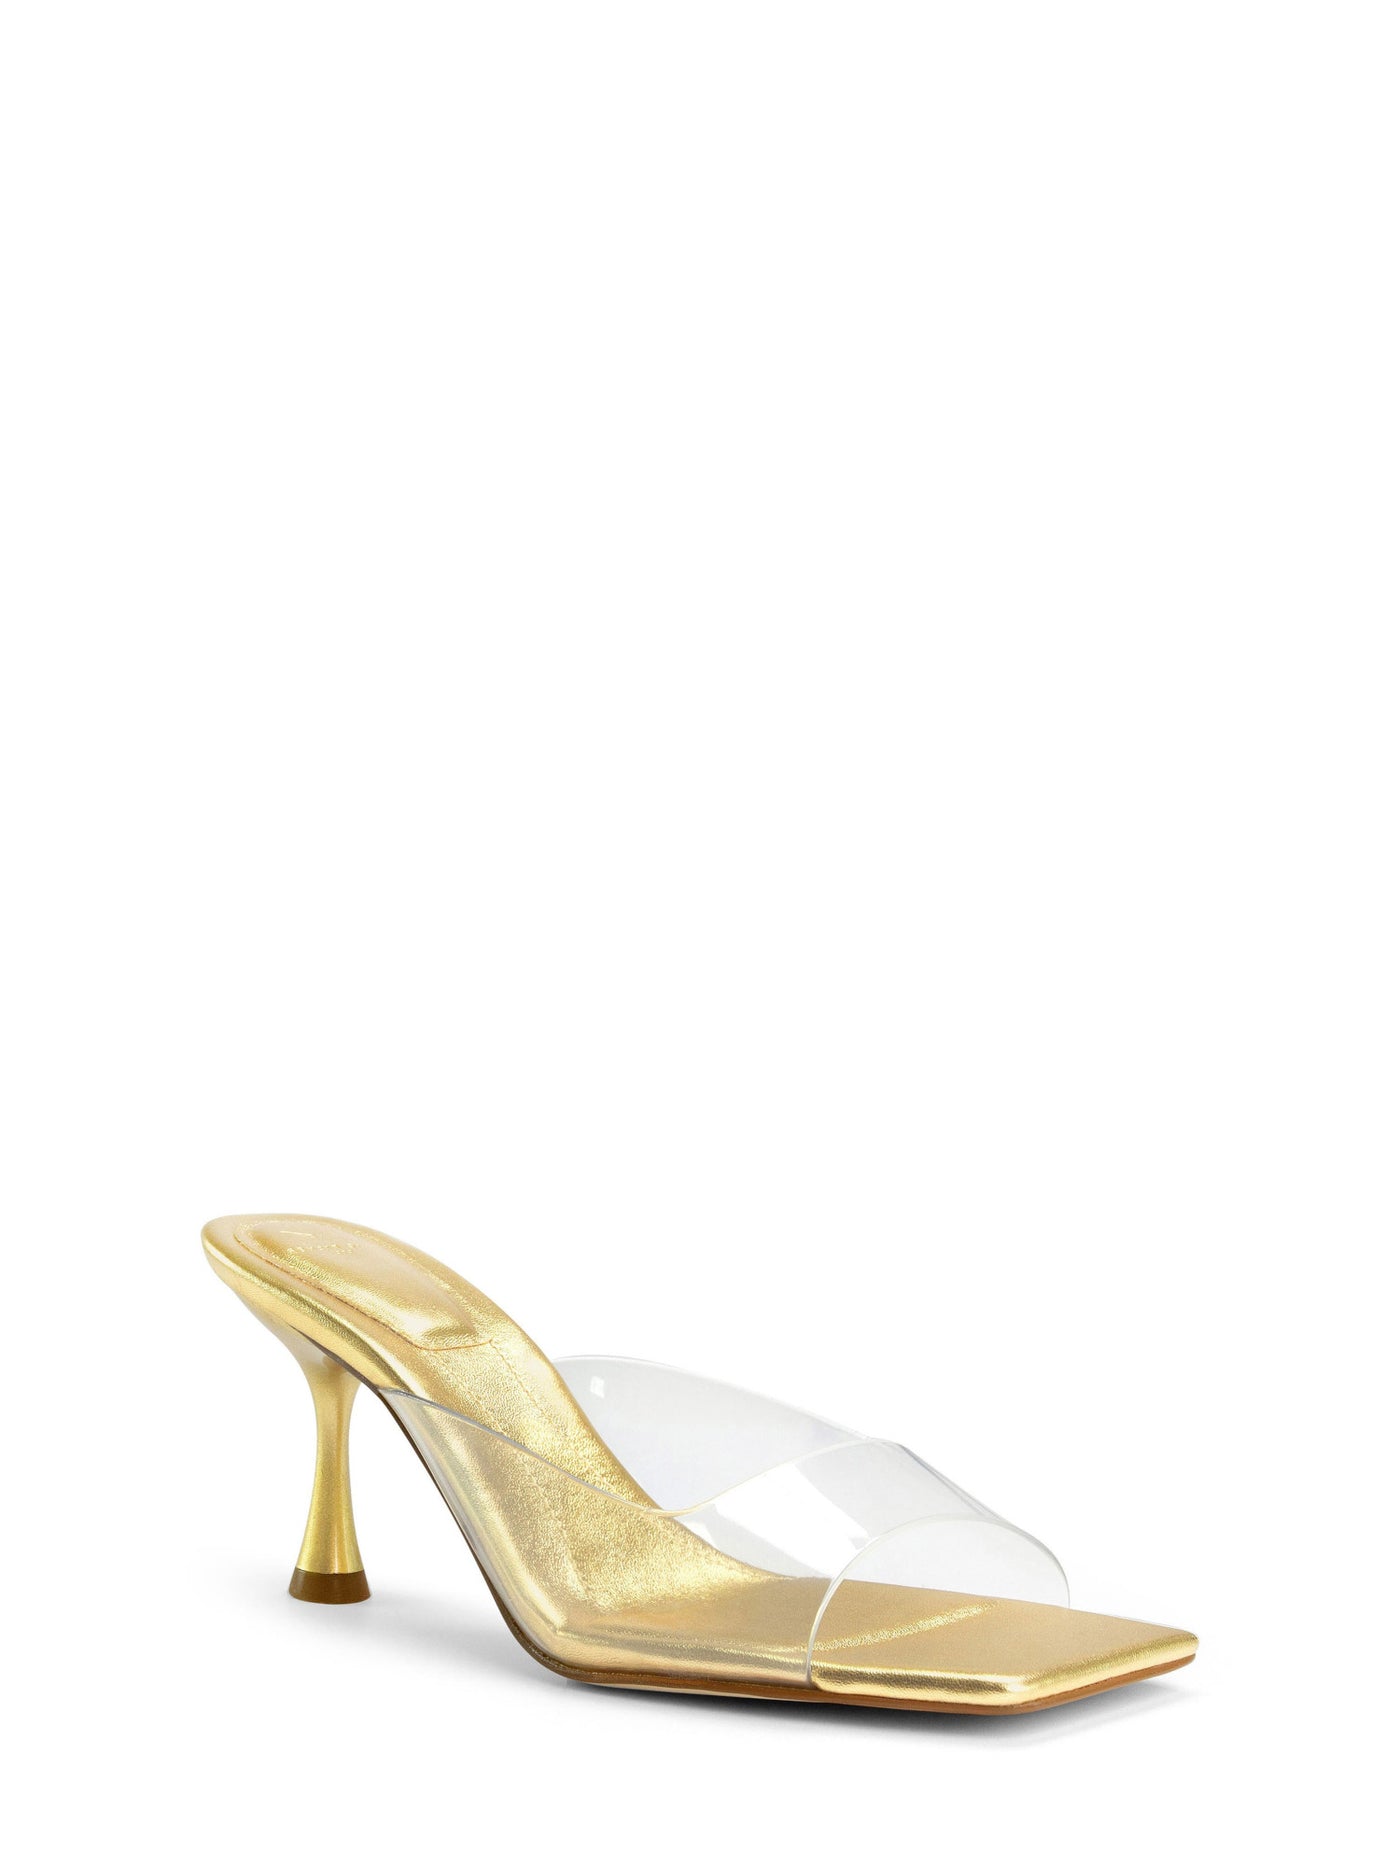 MARC FISHER Womens Gold Padded Marcelo Square Toe Slip On Dress Heeled Sandal 5.5 M